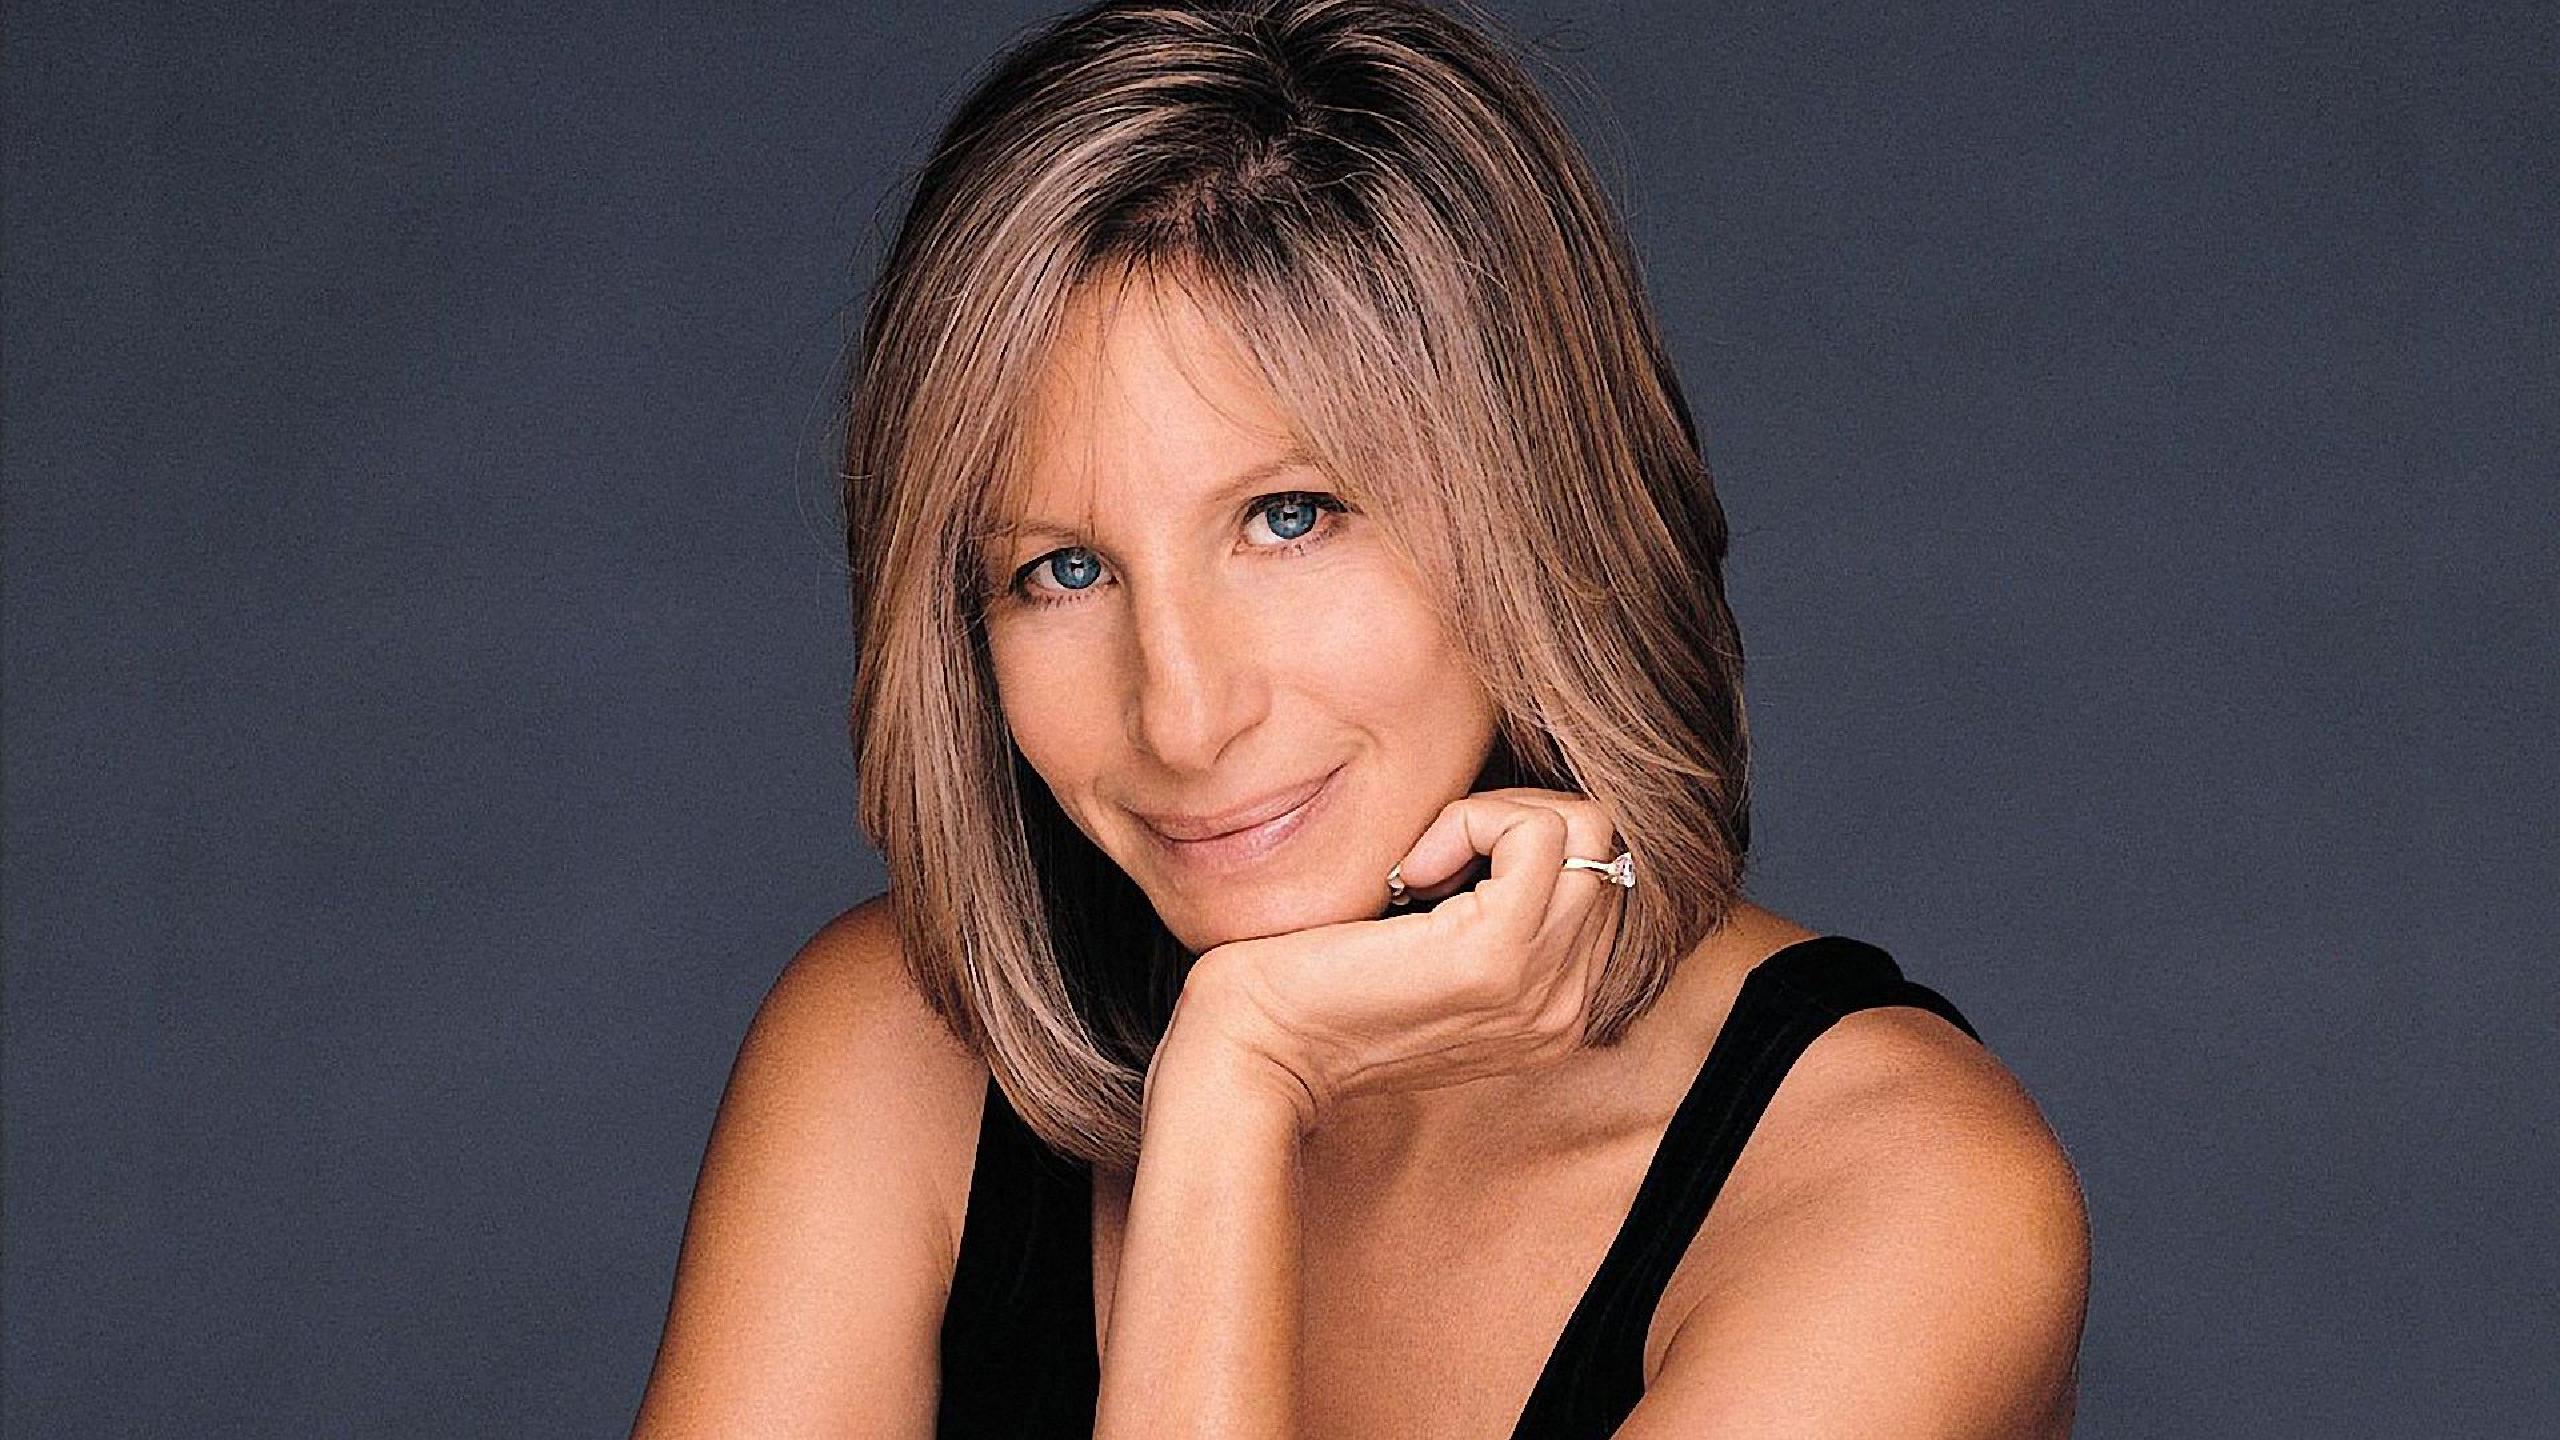 Barbra Streisand revela que fue la musa inspiradora del clásico “I Don’t Want To Miss a Thing” de Aerosmith